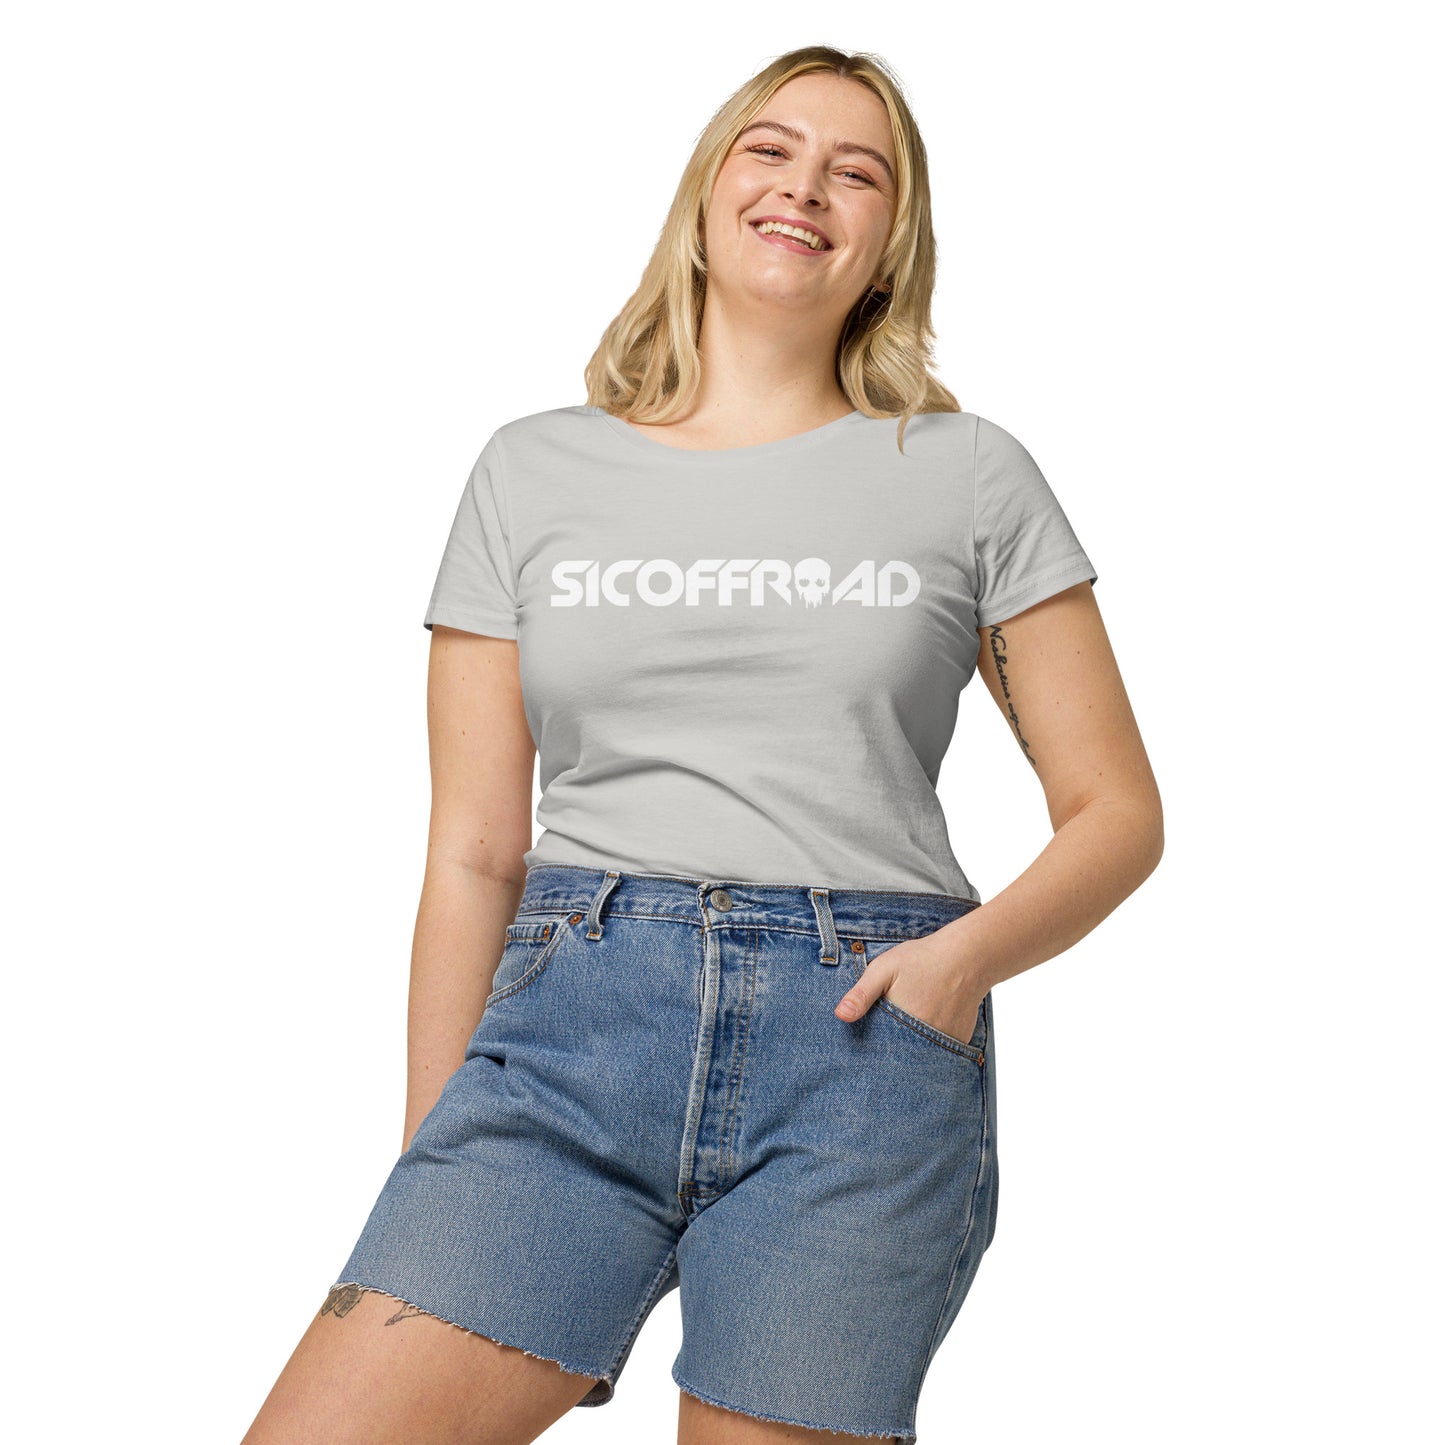 Sicoffroad Women’s Basic Organic T-Shirt